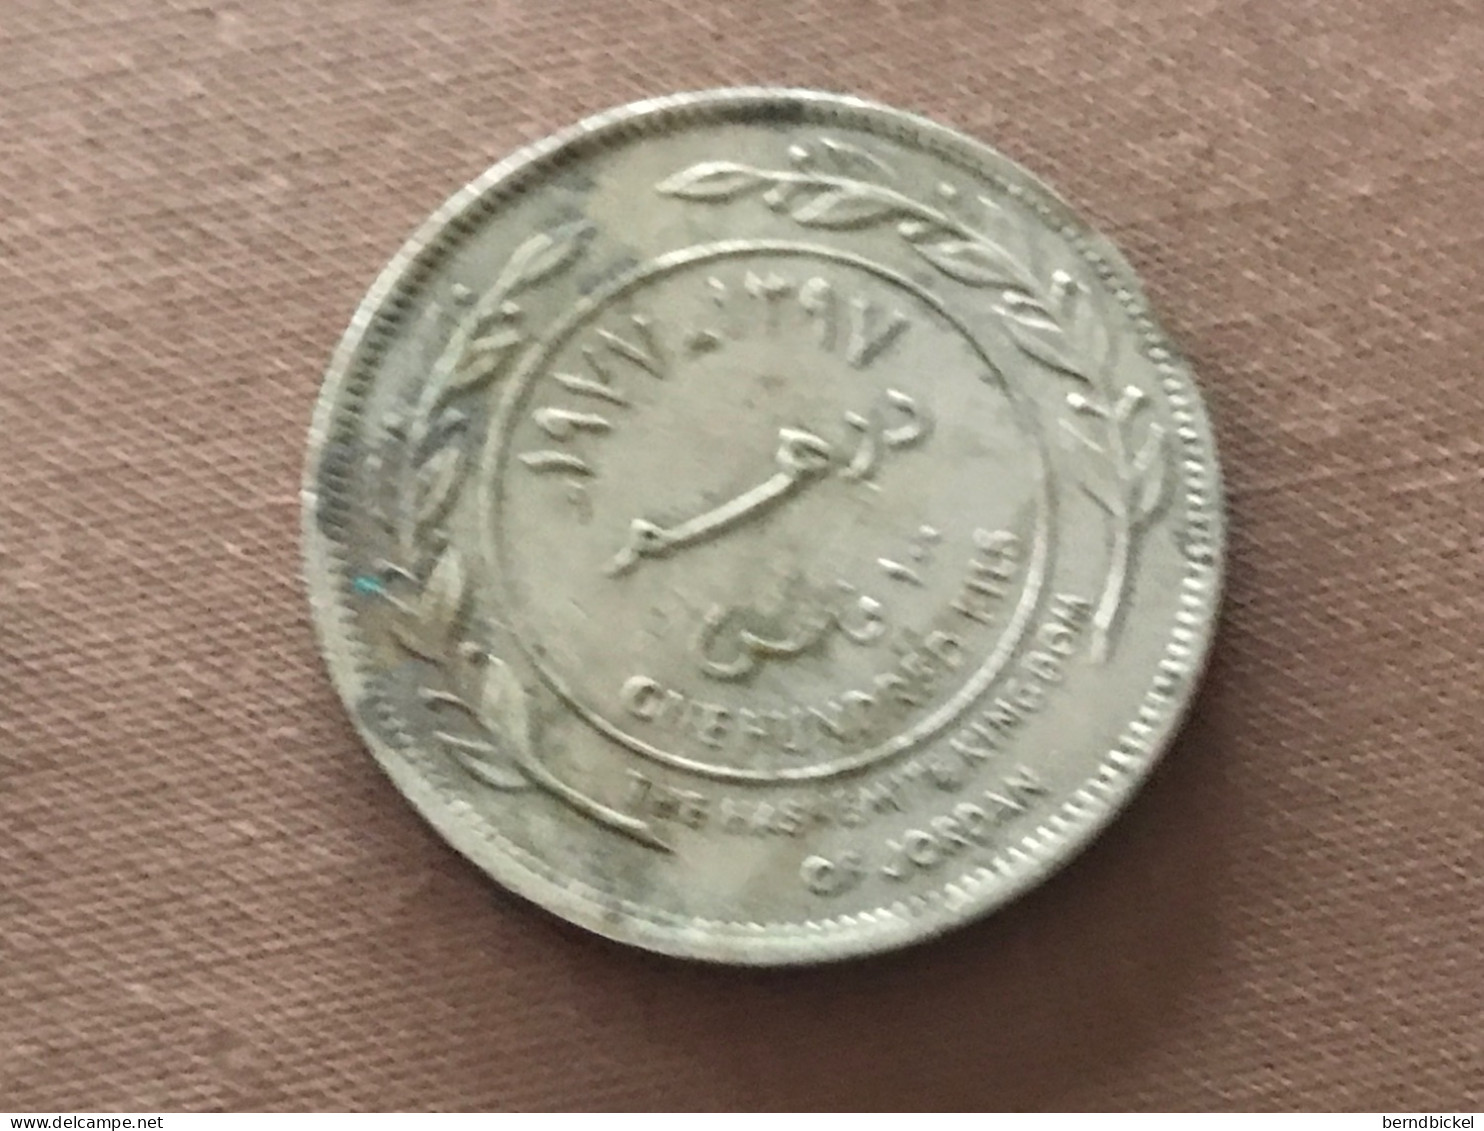 Münze Münzen Umlaufmünze Jordanien 100 Fils 1977 - Jordanien